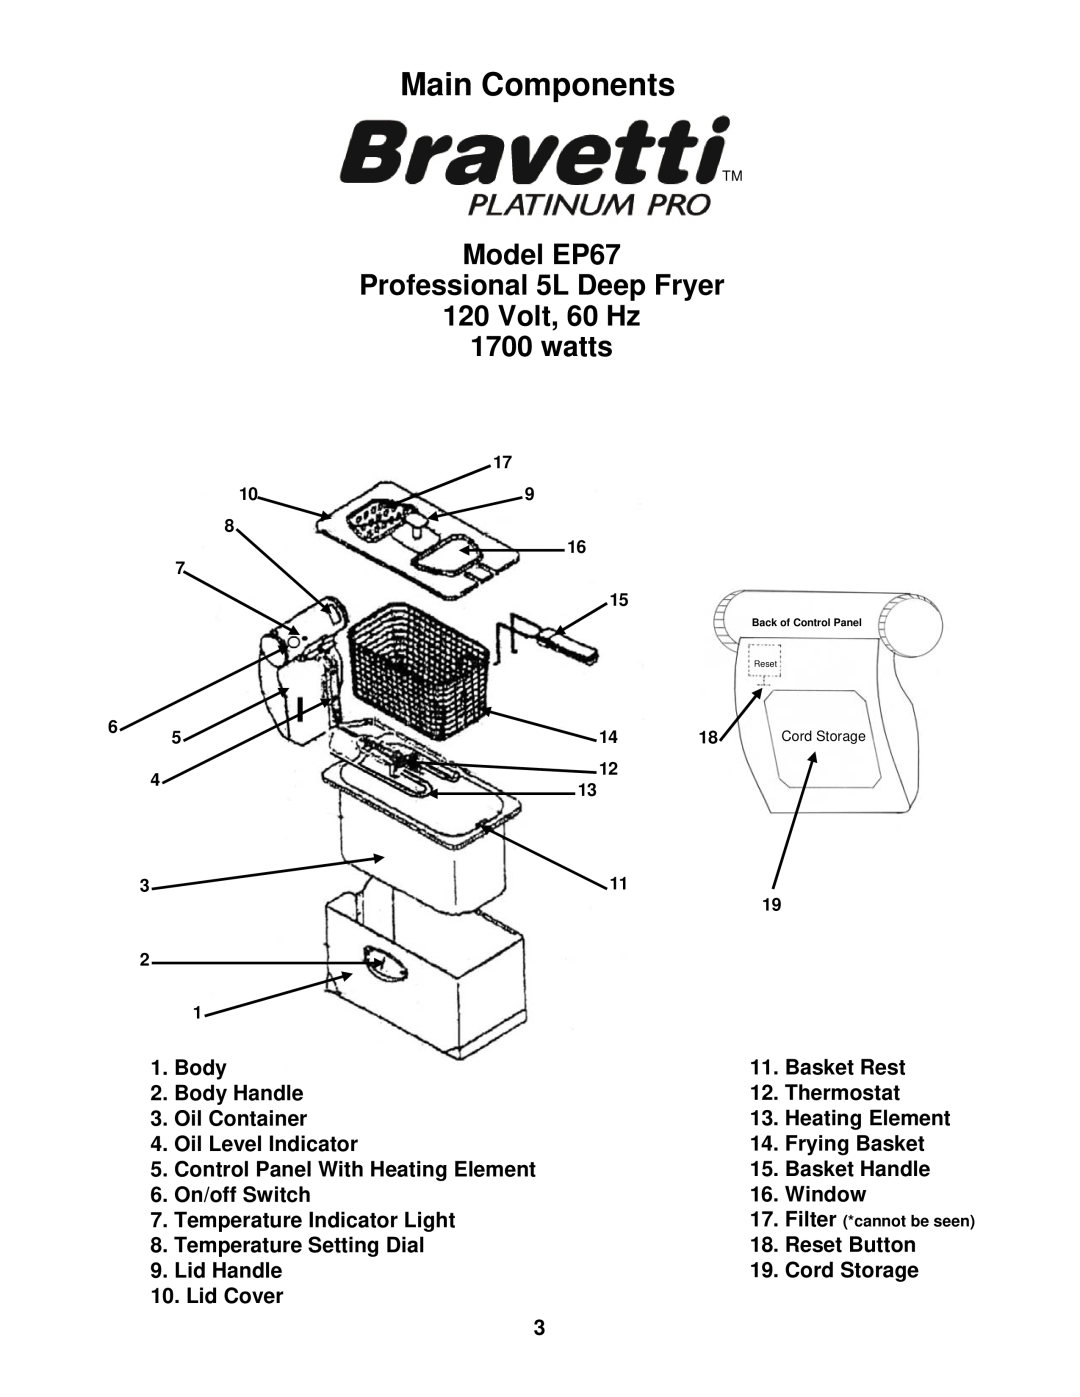 Bravetti manual Main Components, Model EP67 Professional 5L Deep Fryer, Volt, 60 Hz 1700 watts 